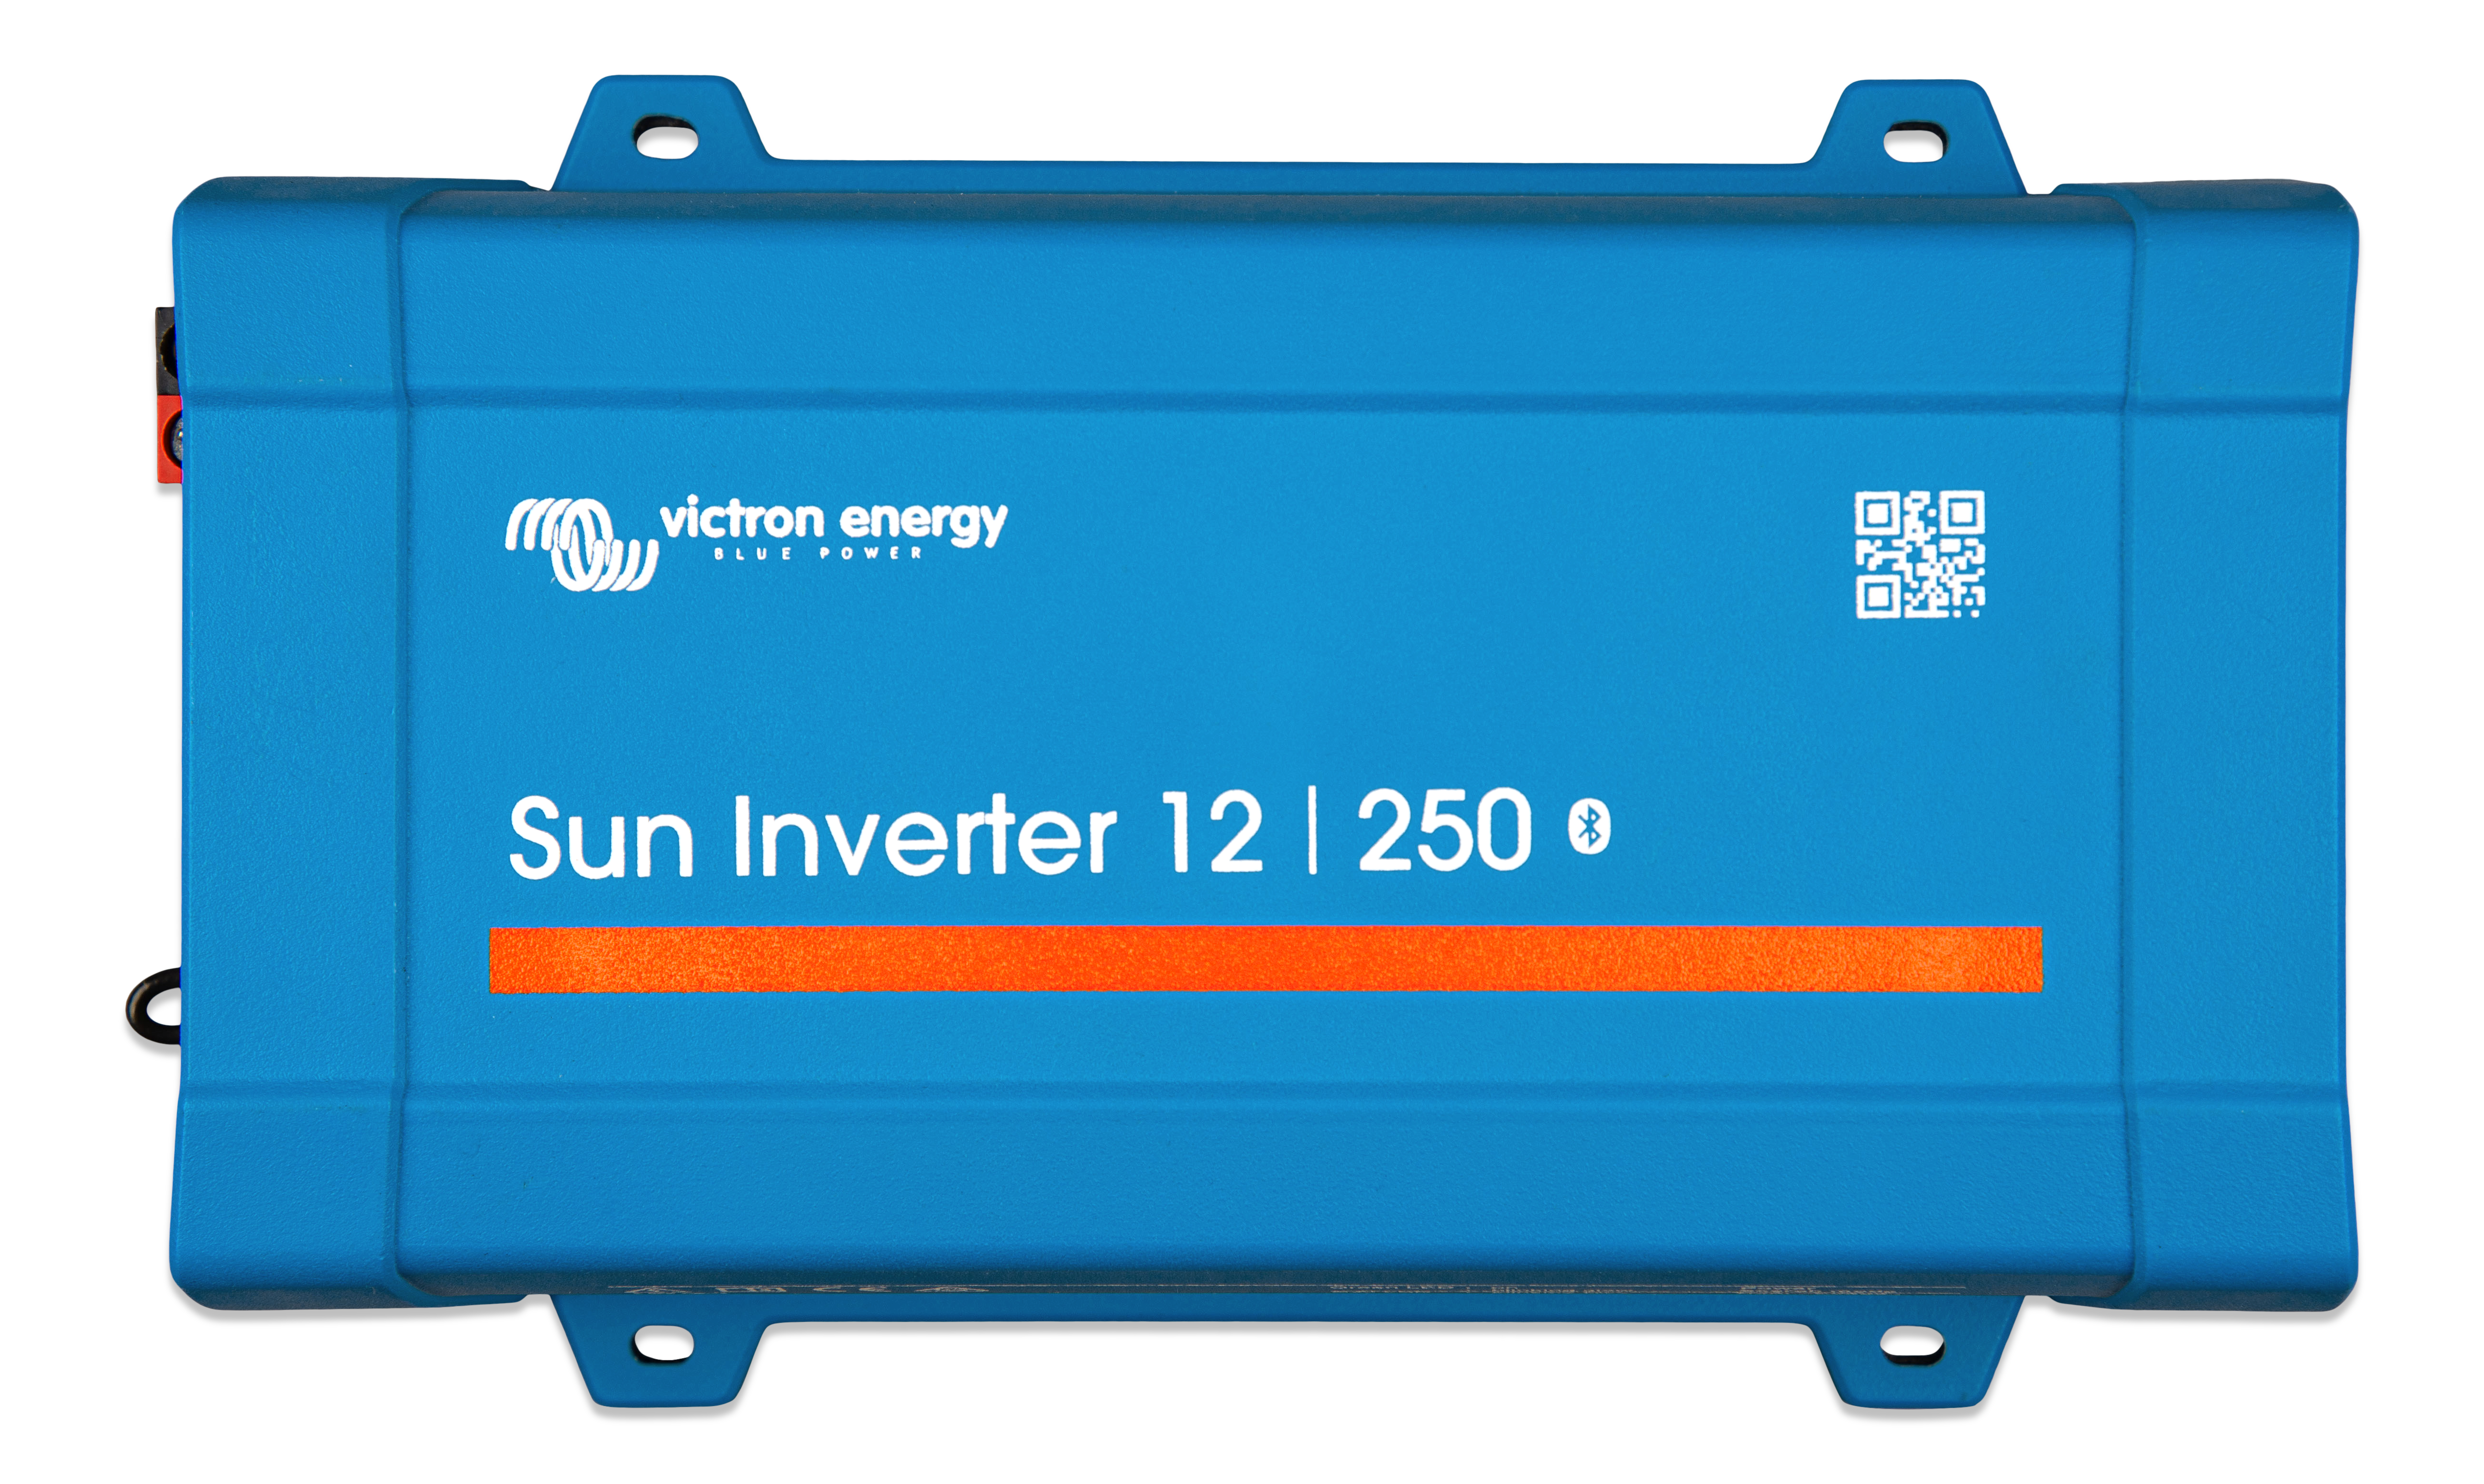 Sun Inverter - Victron Energy